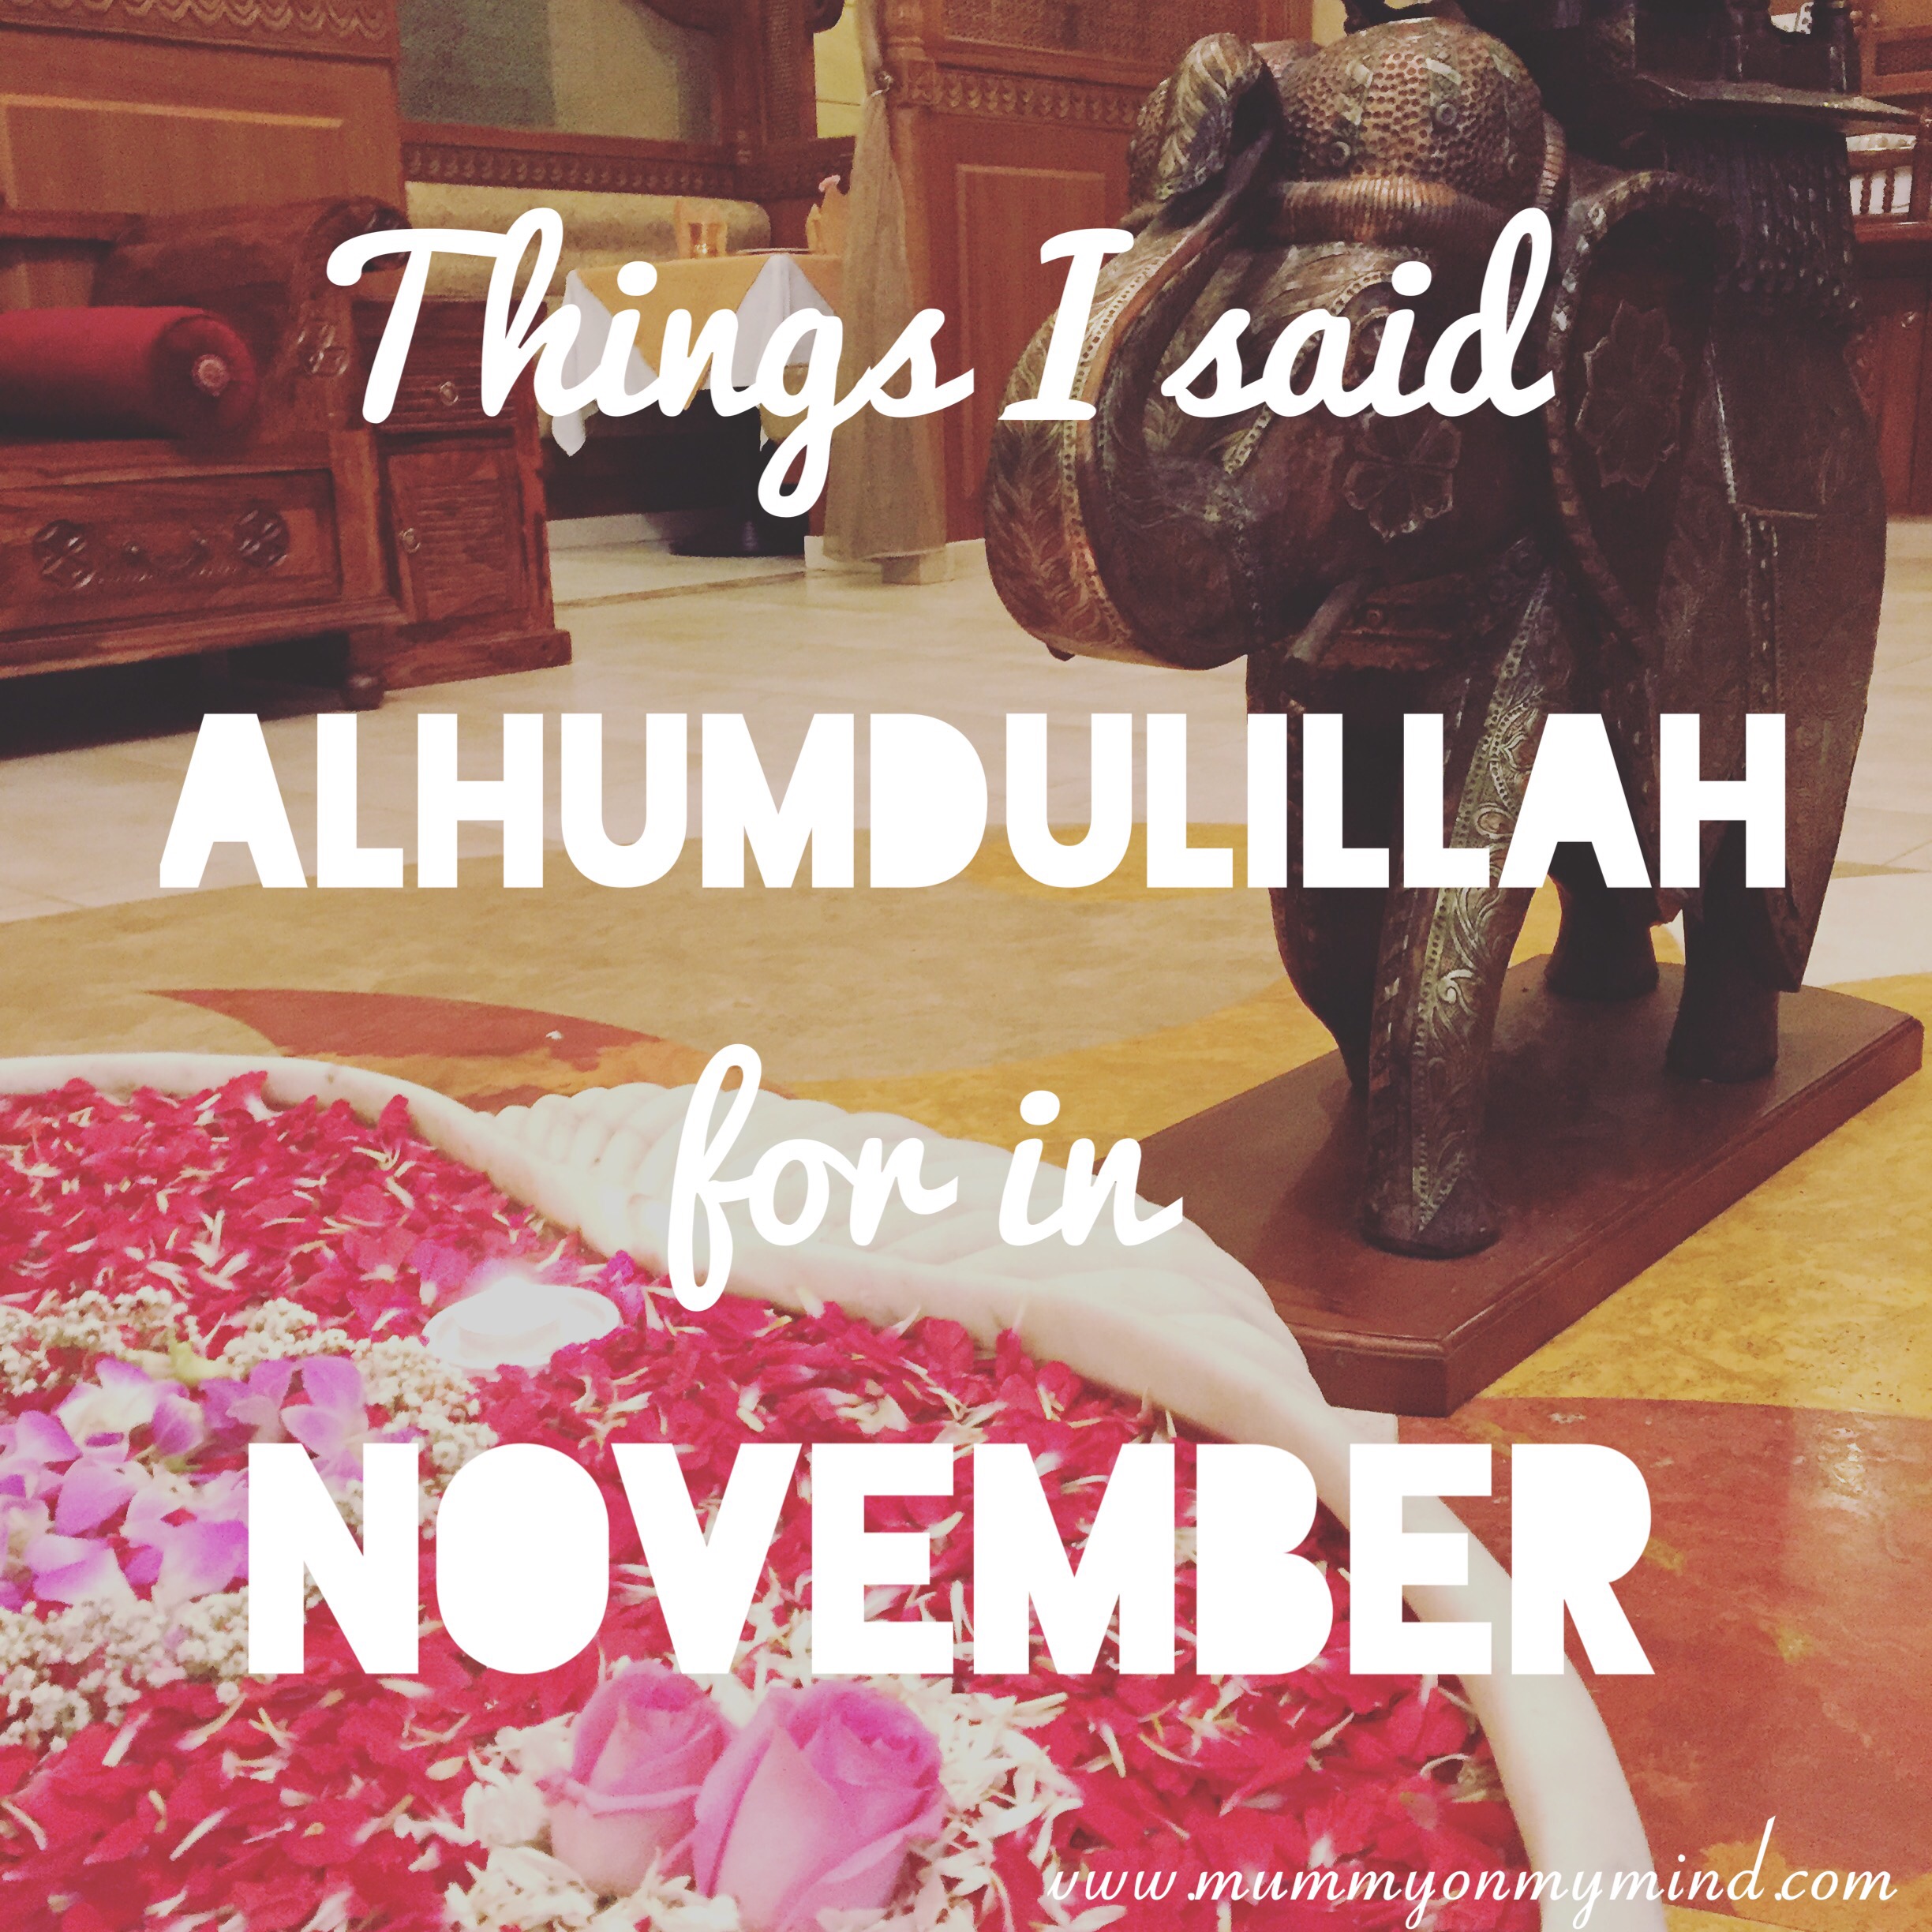 Things I said Alhumdulillah for in November 2015…